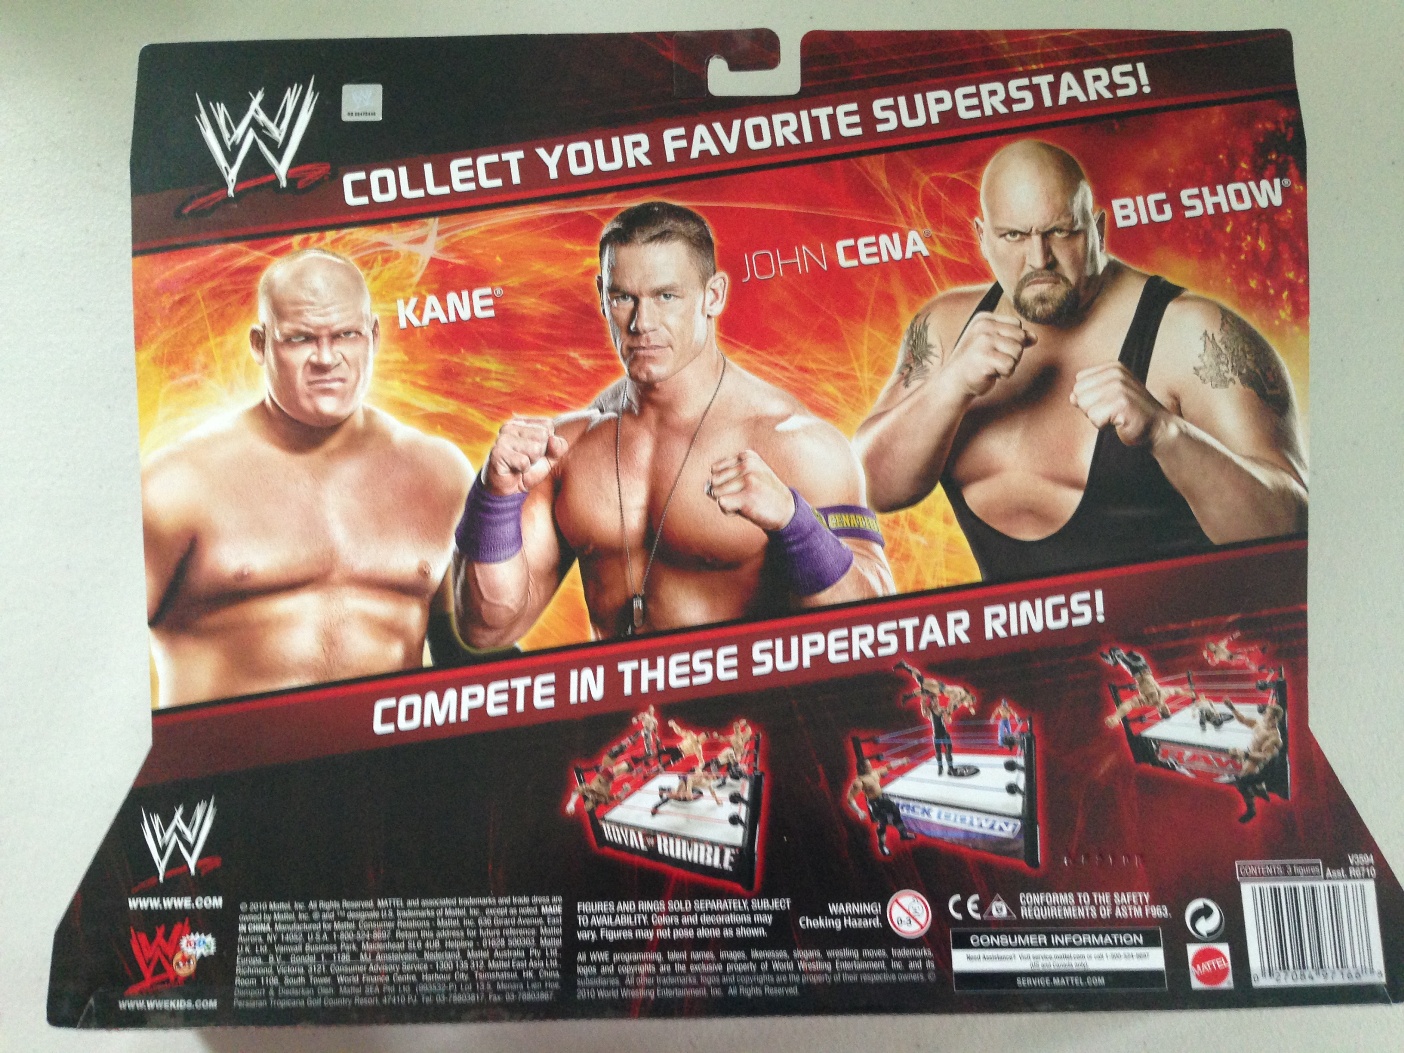 Kane John Cena and The Big Show